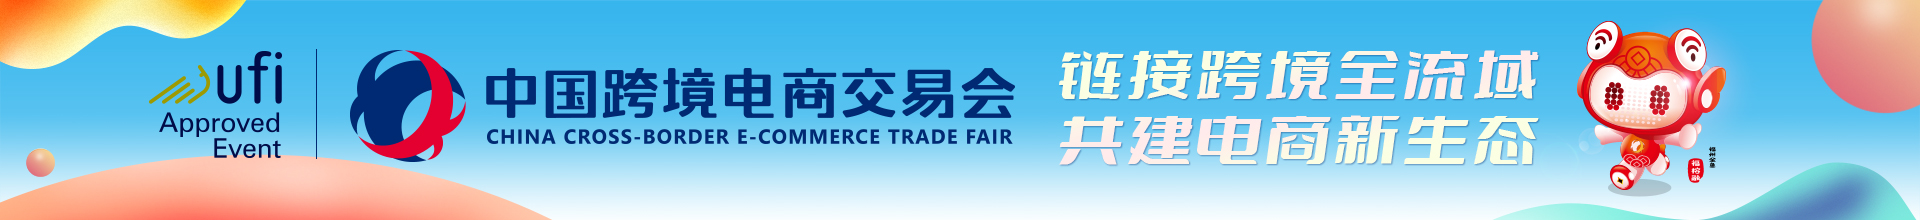 China Cross-border E-commerce Fair